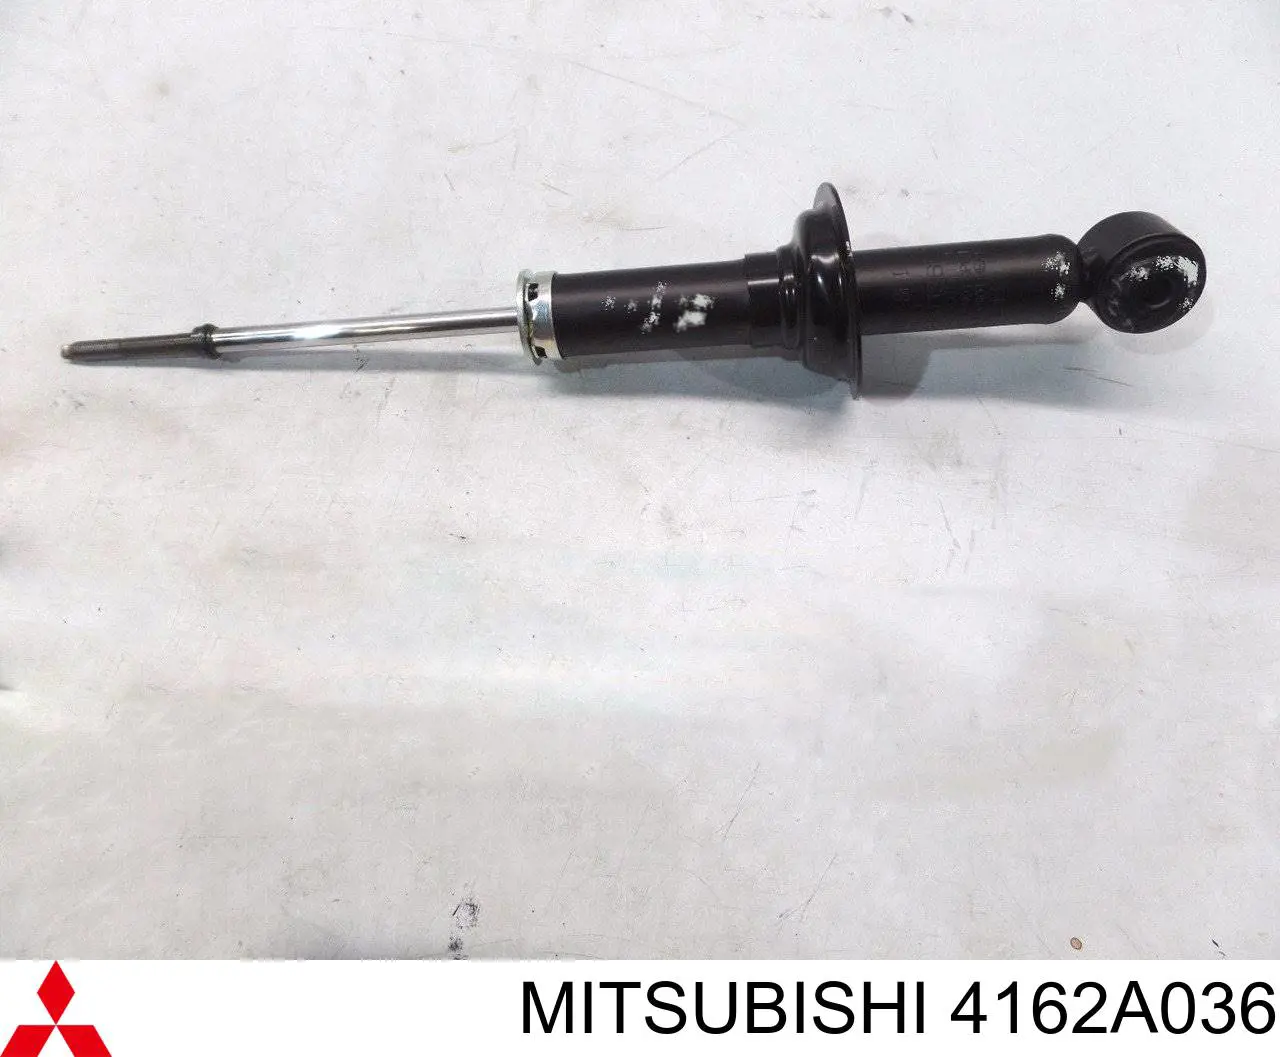 4162A036 Mitsubishi amortecedor traseiro